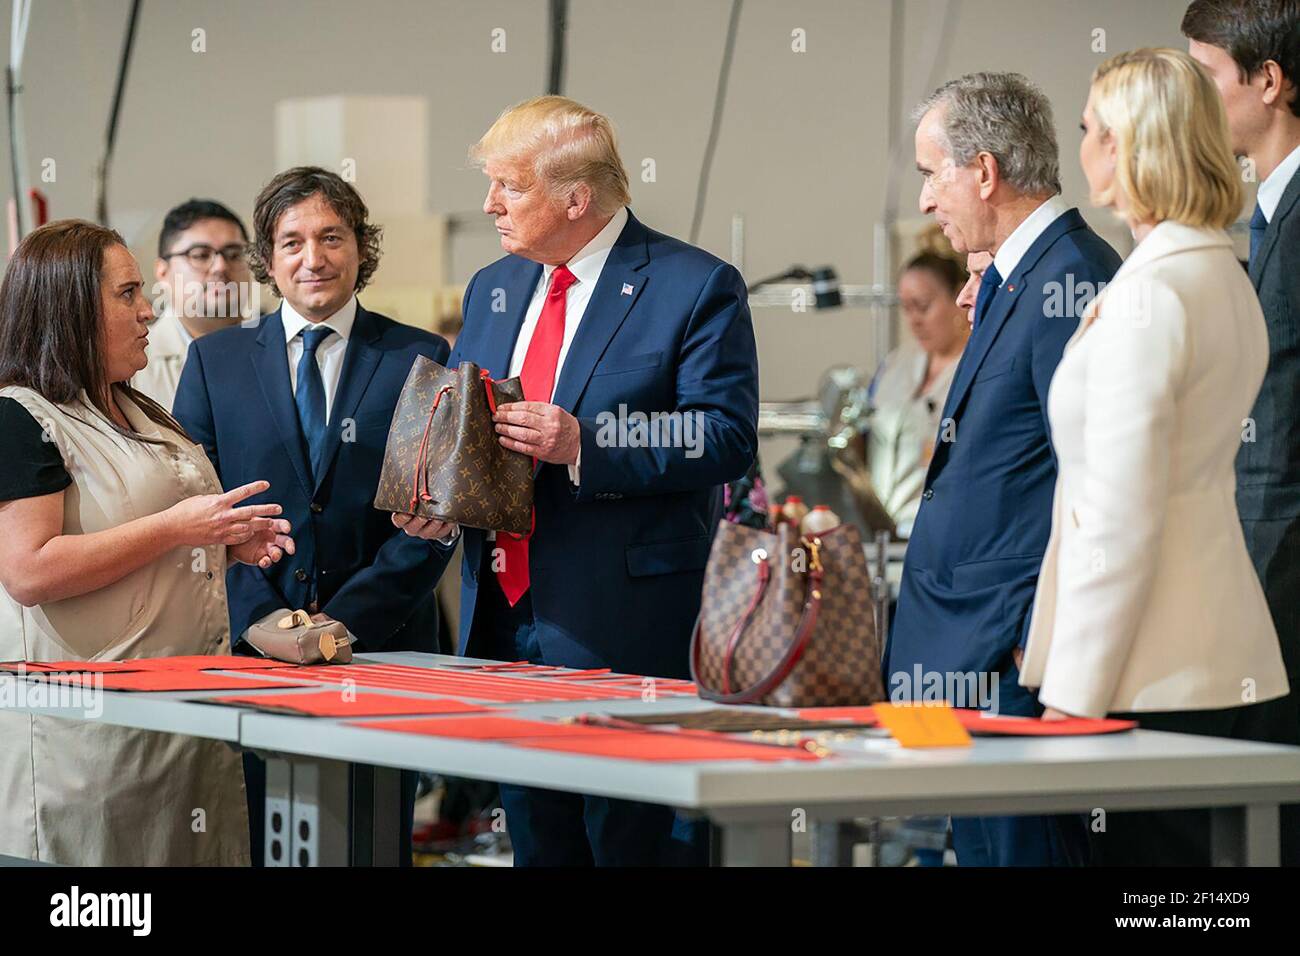 Video: President Donald Trump, Ivanka Trump Attend Louis Vuitton